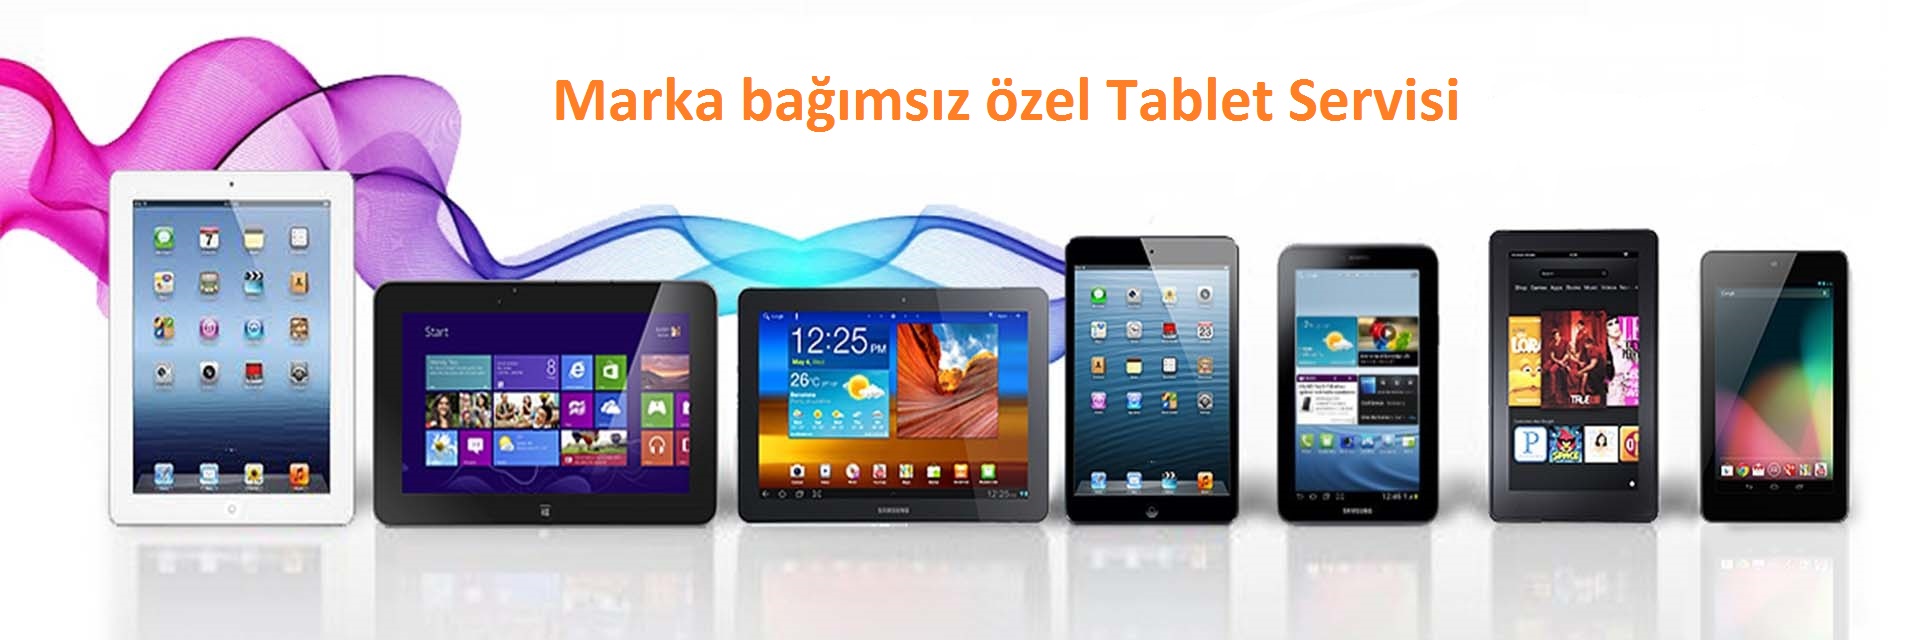 Bursa Tablet Servisi